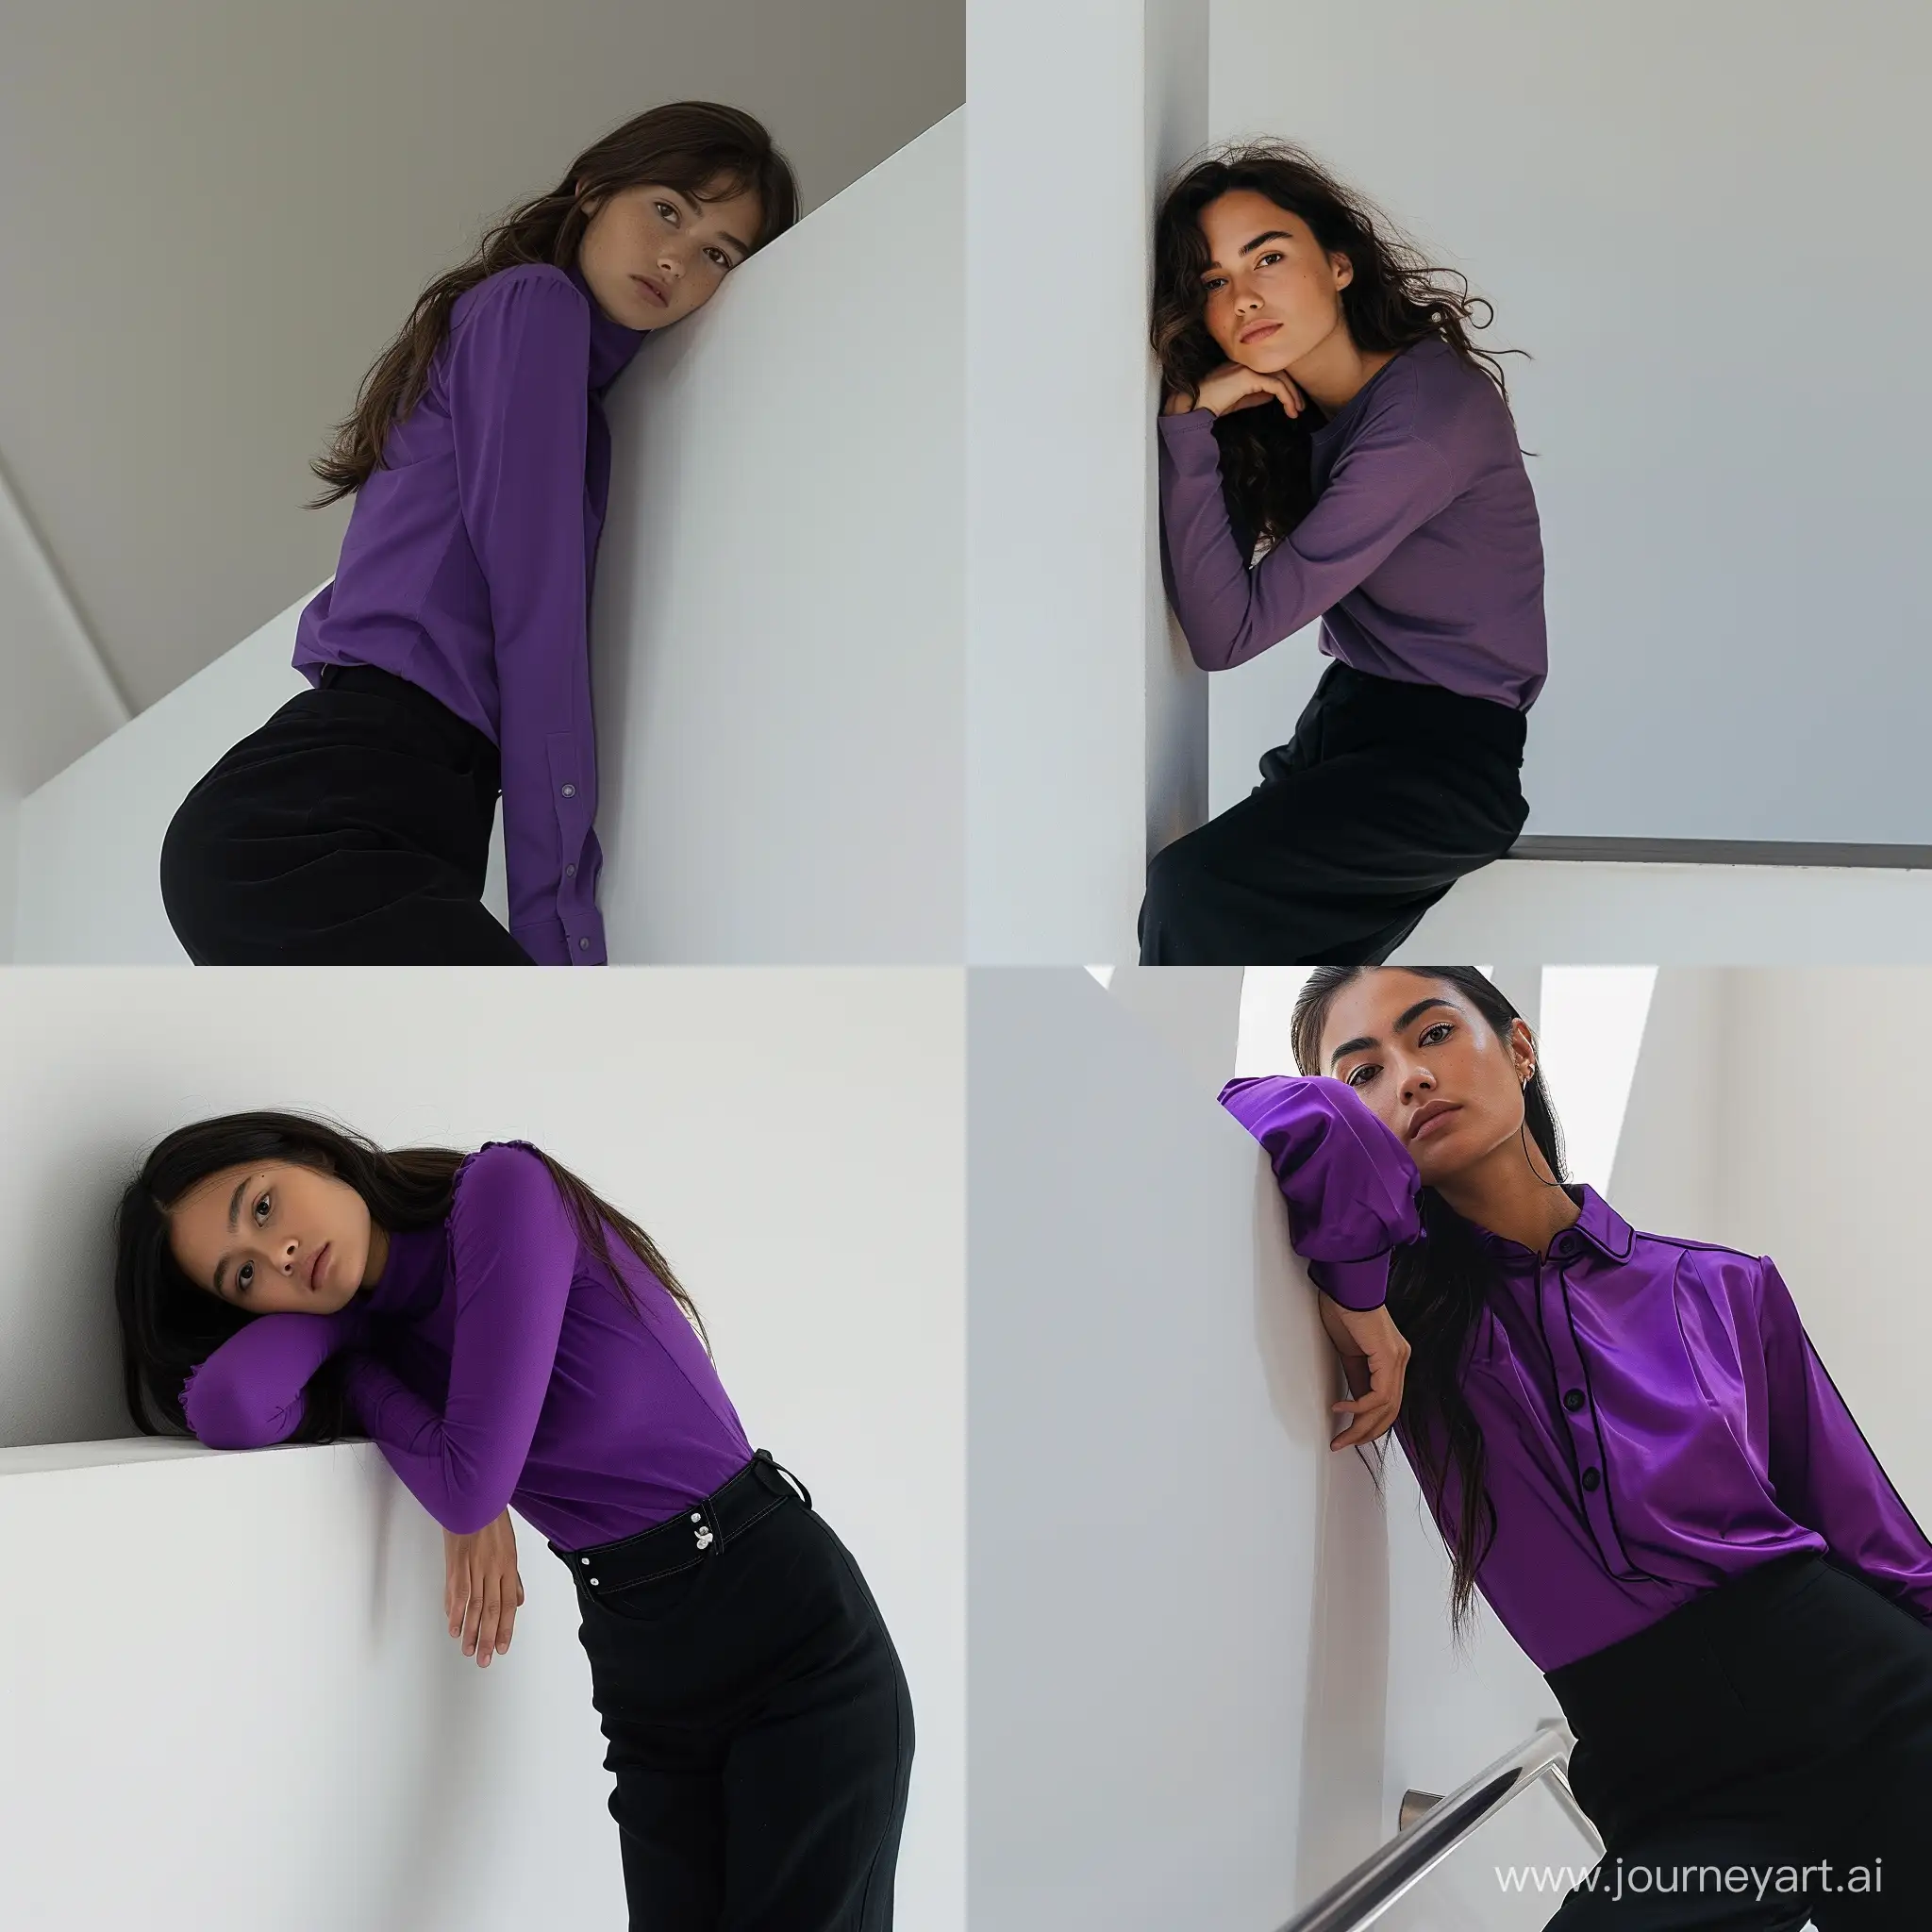 Stylish-Women-in-Purple-Attire-Leaning-on-White-Wall